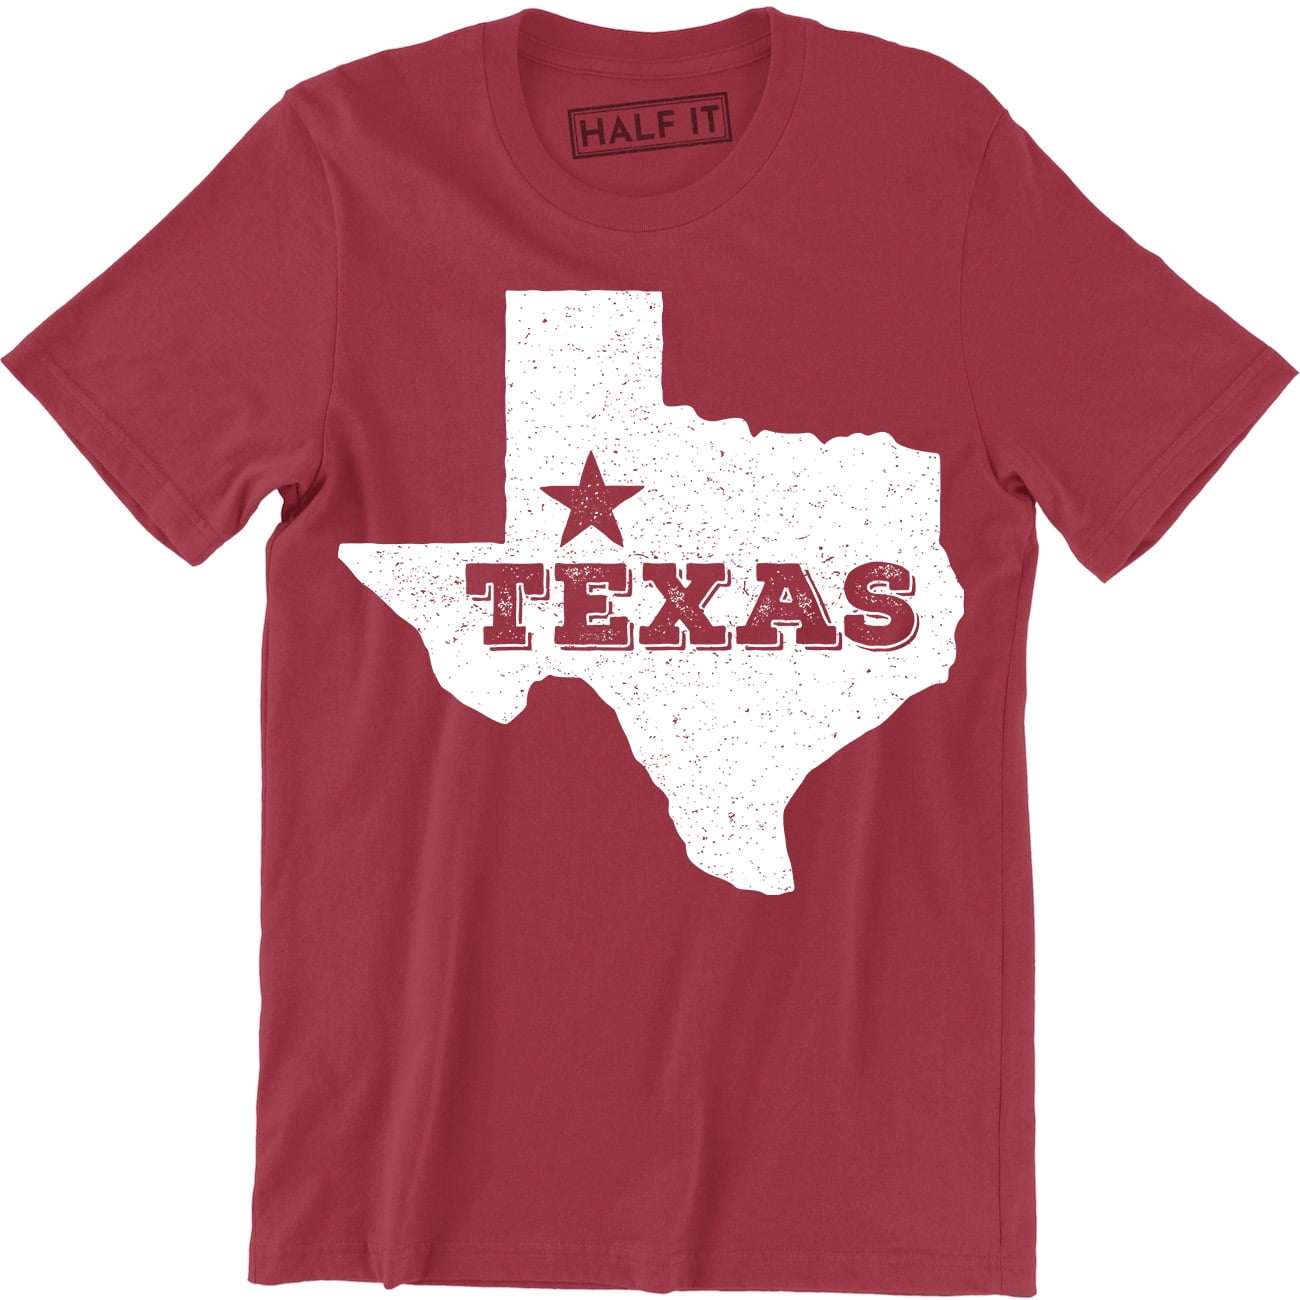 Gift for Texan Texas Austin Outfit Cowboy Land Clothing Texas Pride Texas Shirt Peace Love Texas T-Shirt Home State Apparel